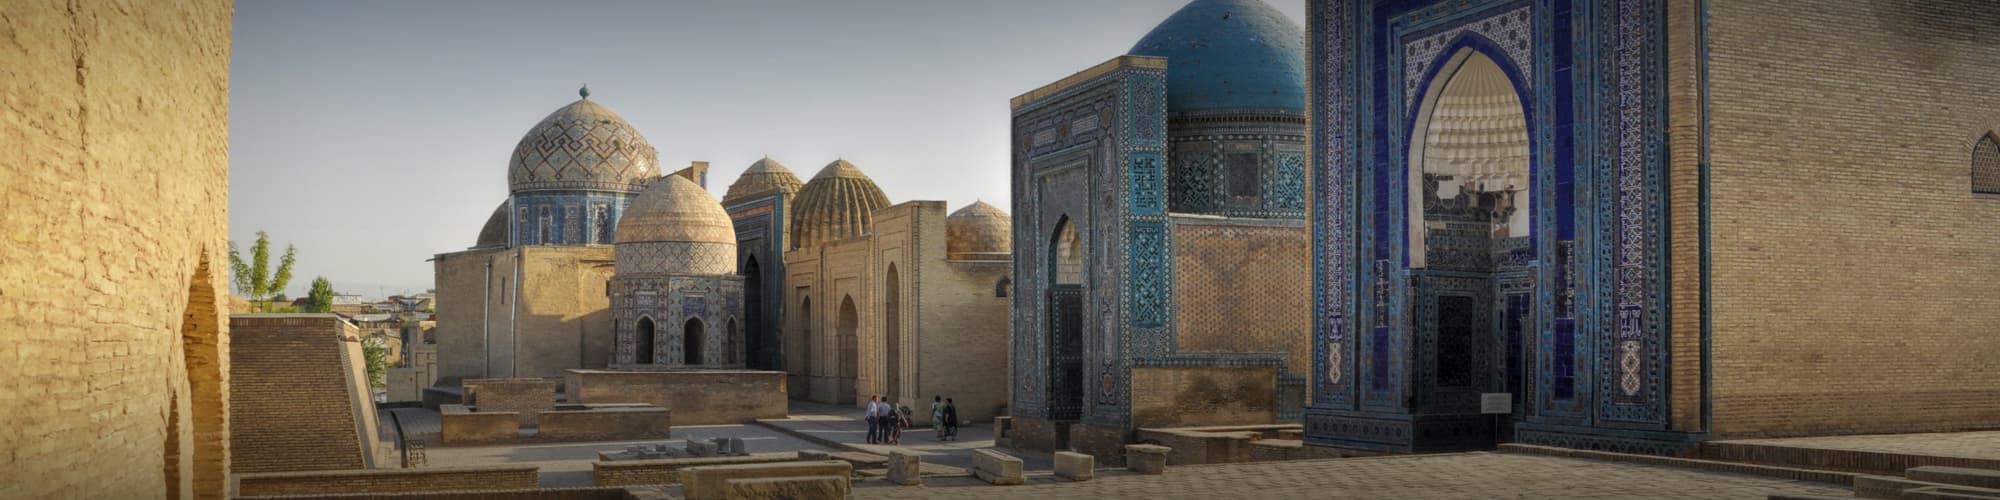 Trek Ouzbekistan © MisoKnitl/iStock